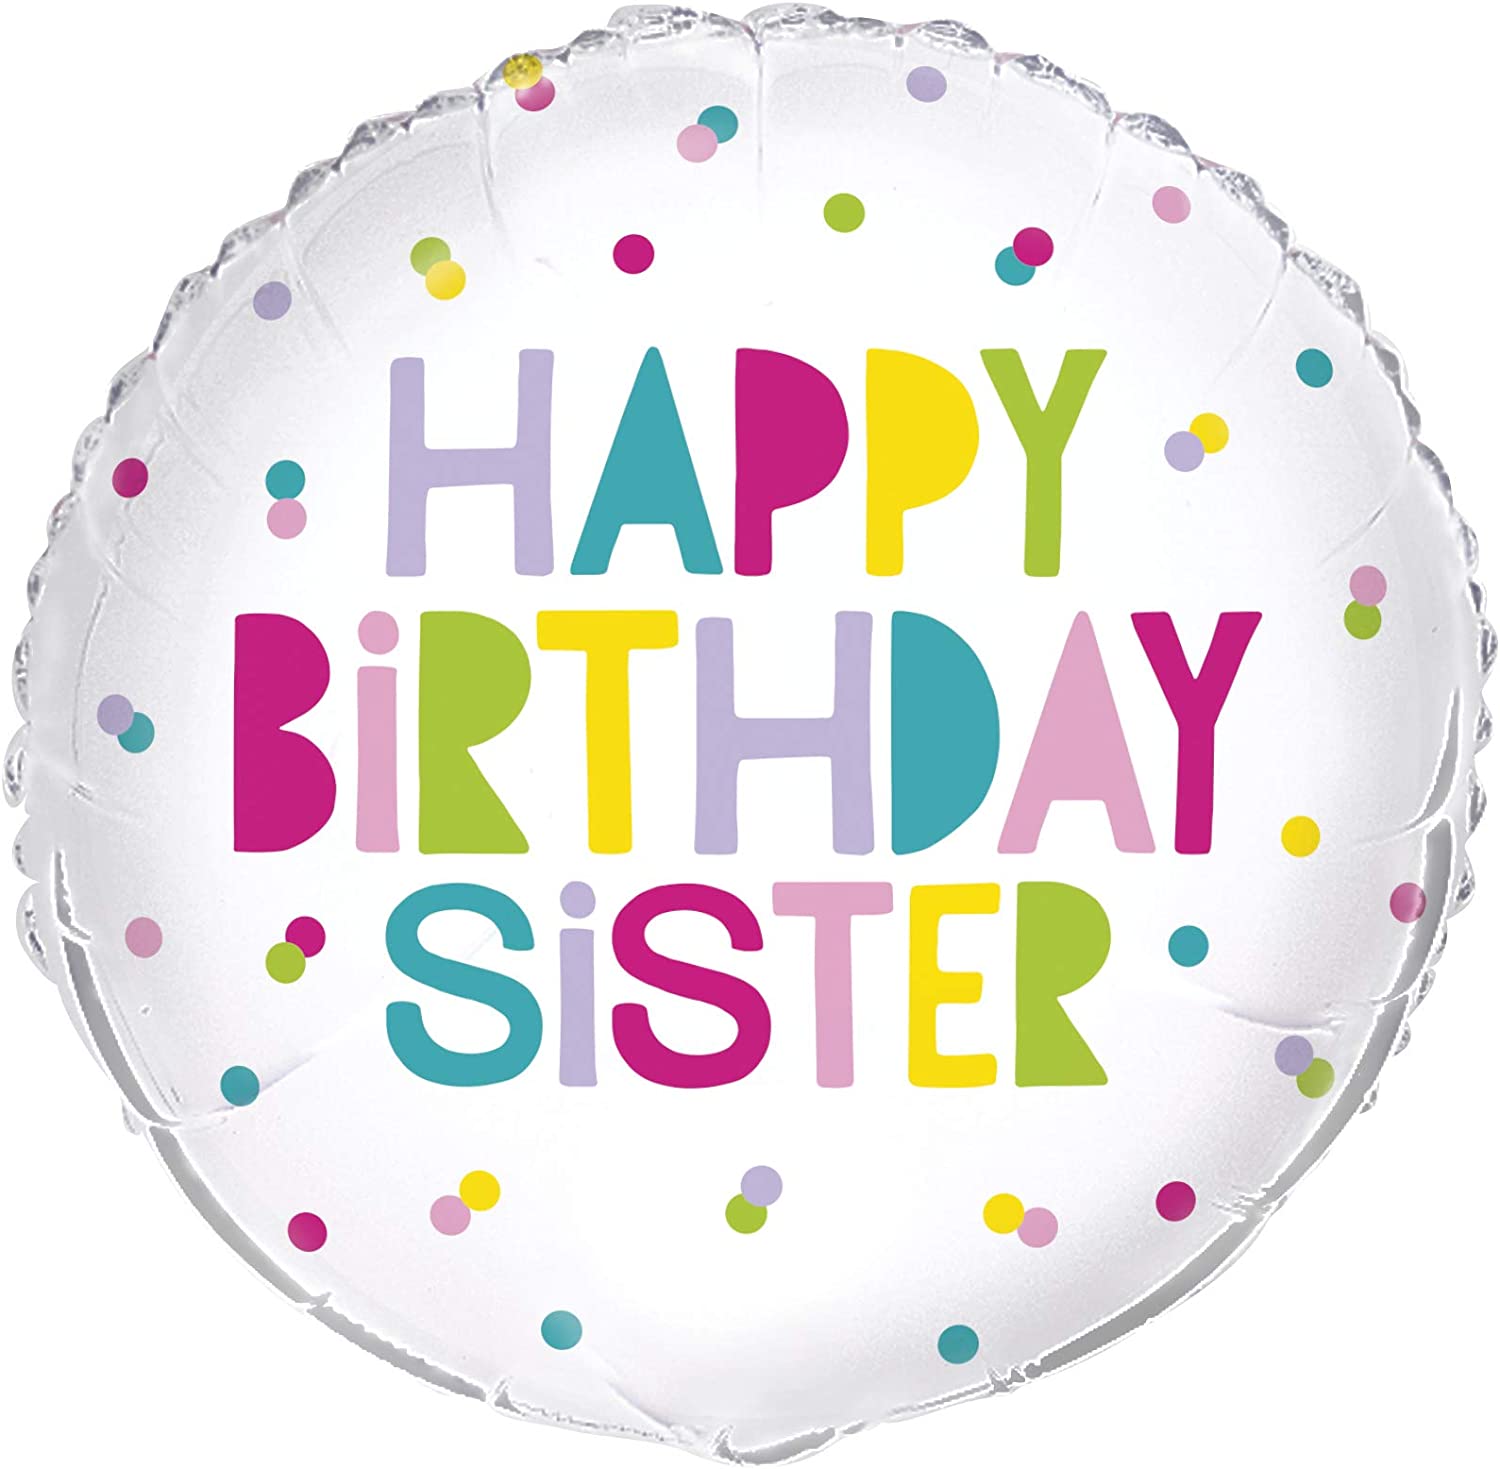 Birthday sister ballong